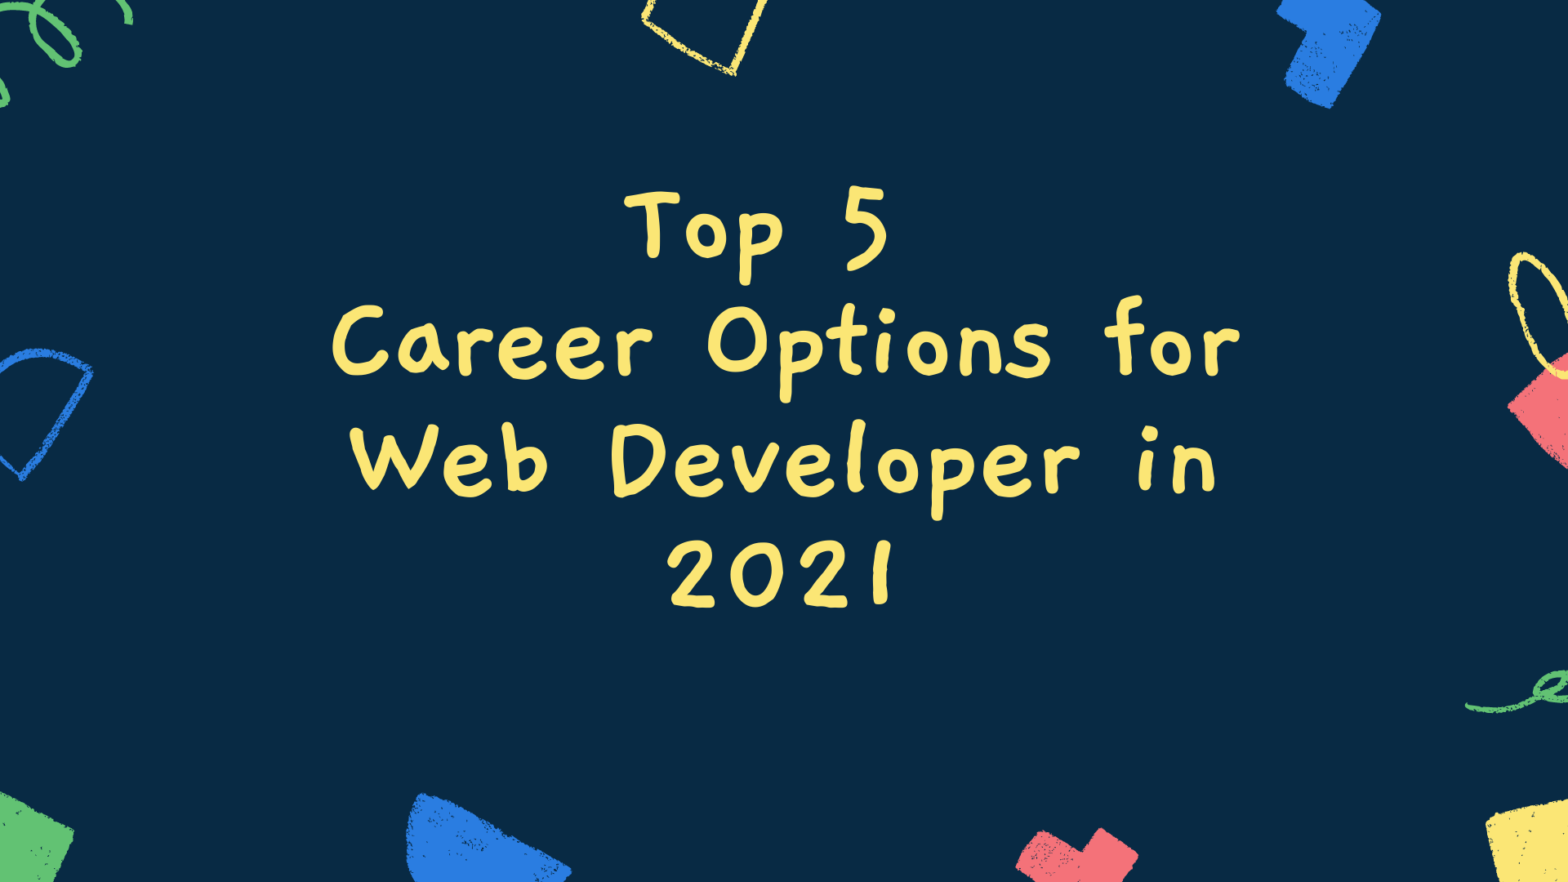 Top 5 Career Options for Web Developer in 2021